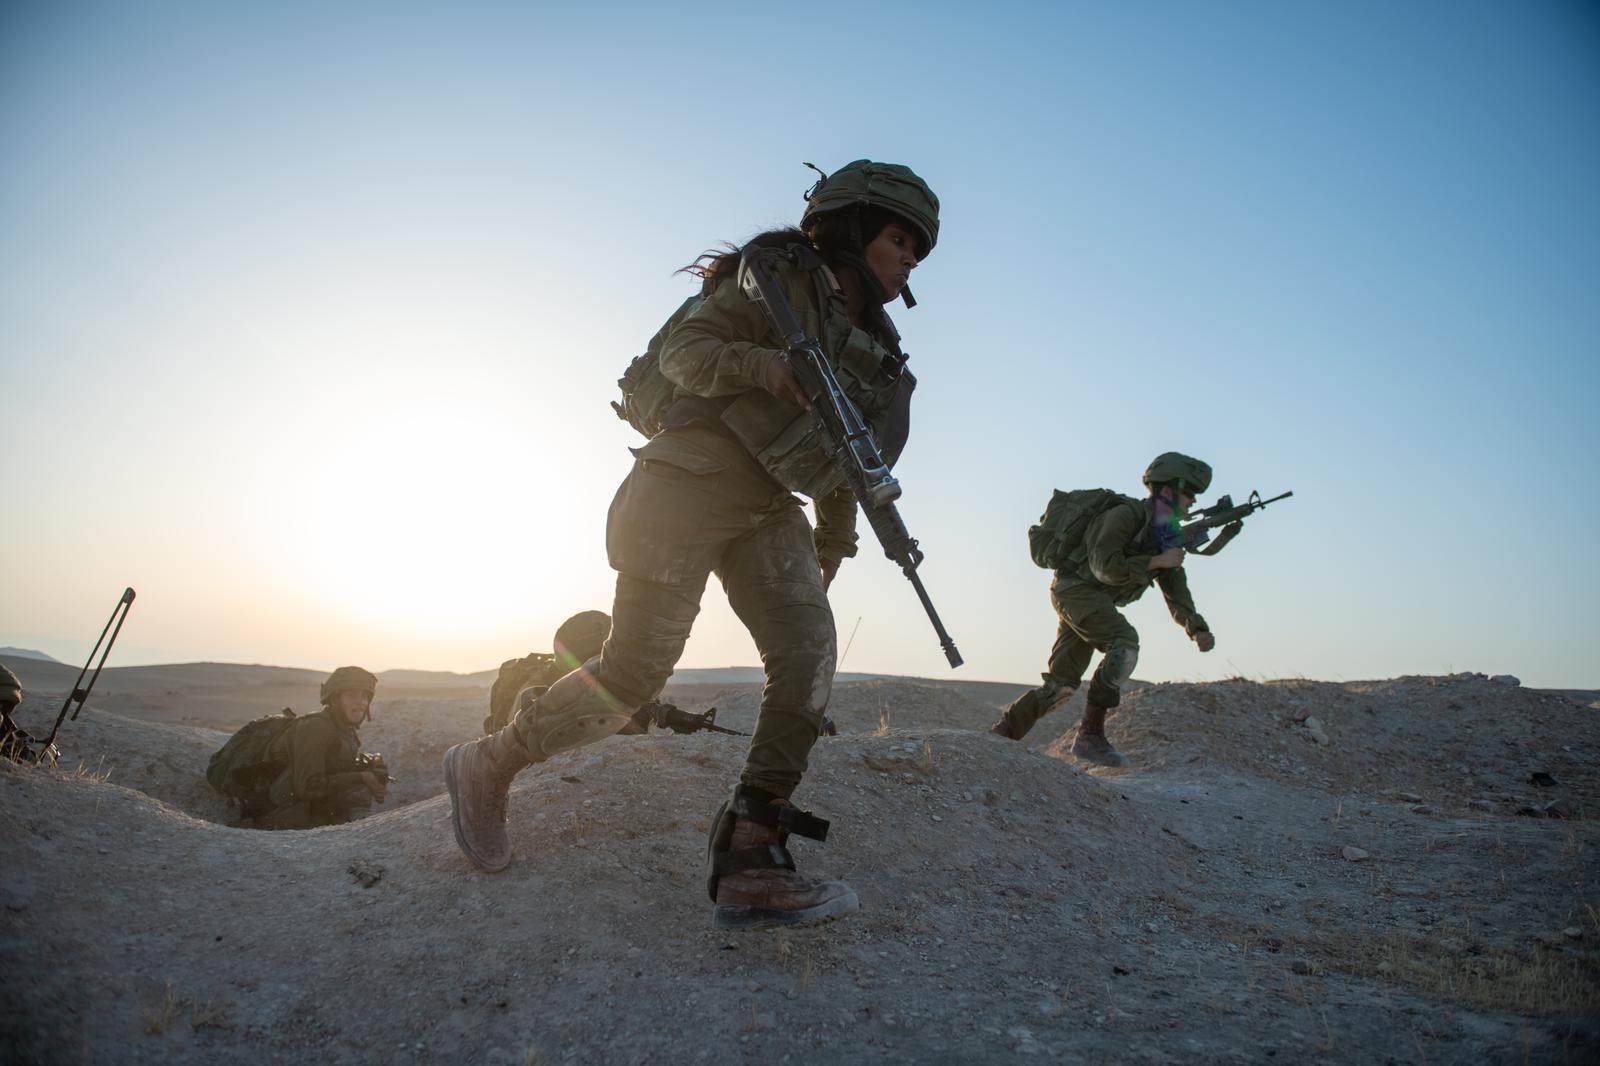 IDF sees surge in female conscripts seeking combat roles since